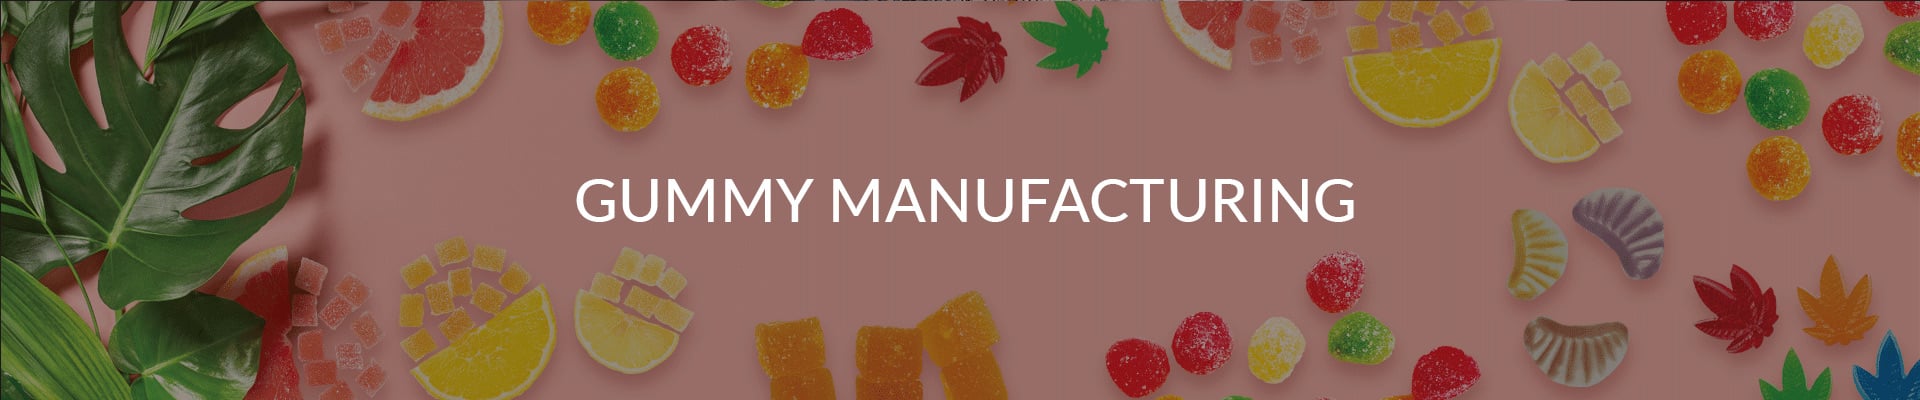 Gummy Manufacturing Robinson Pharma, Inc.